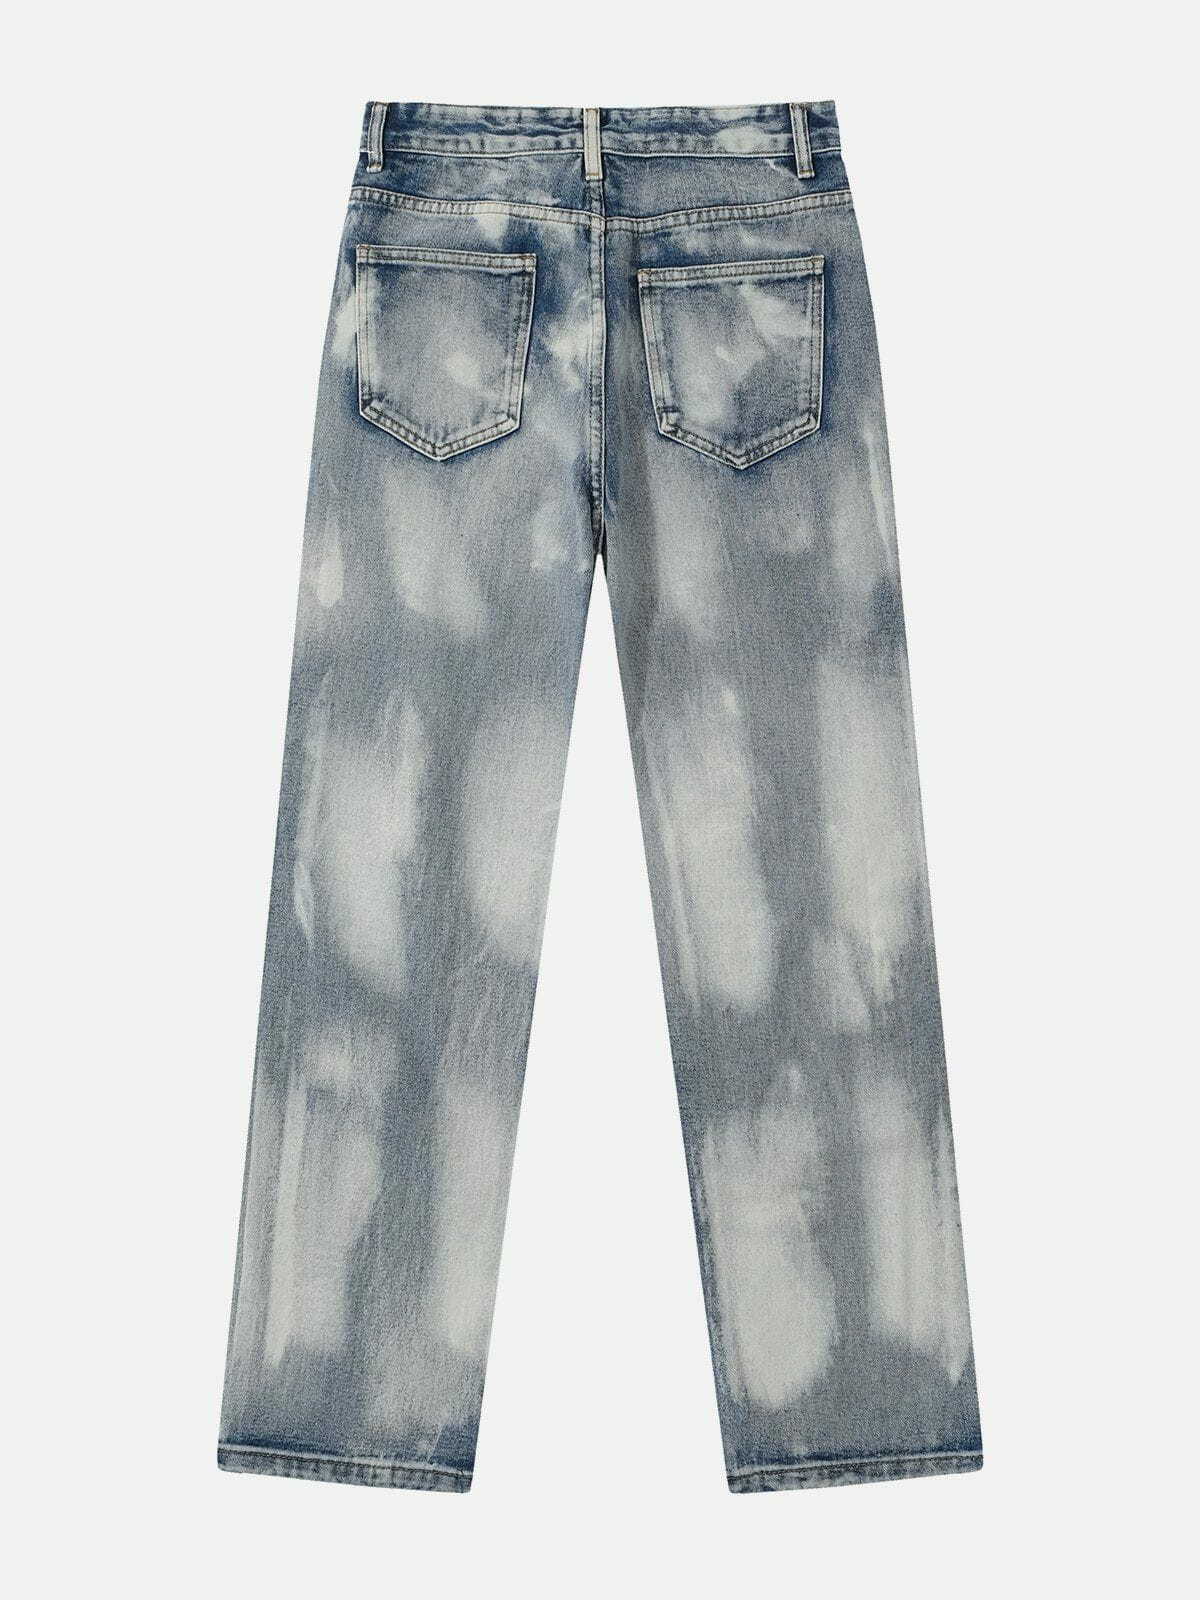 vibrant tiedye jeans edgy & trendy streetwear 2817